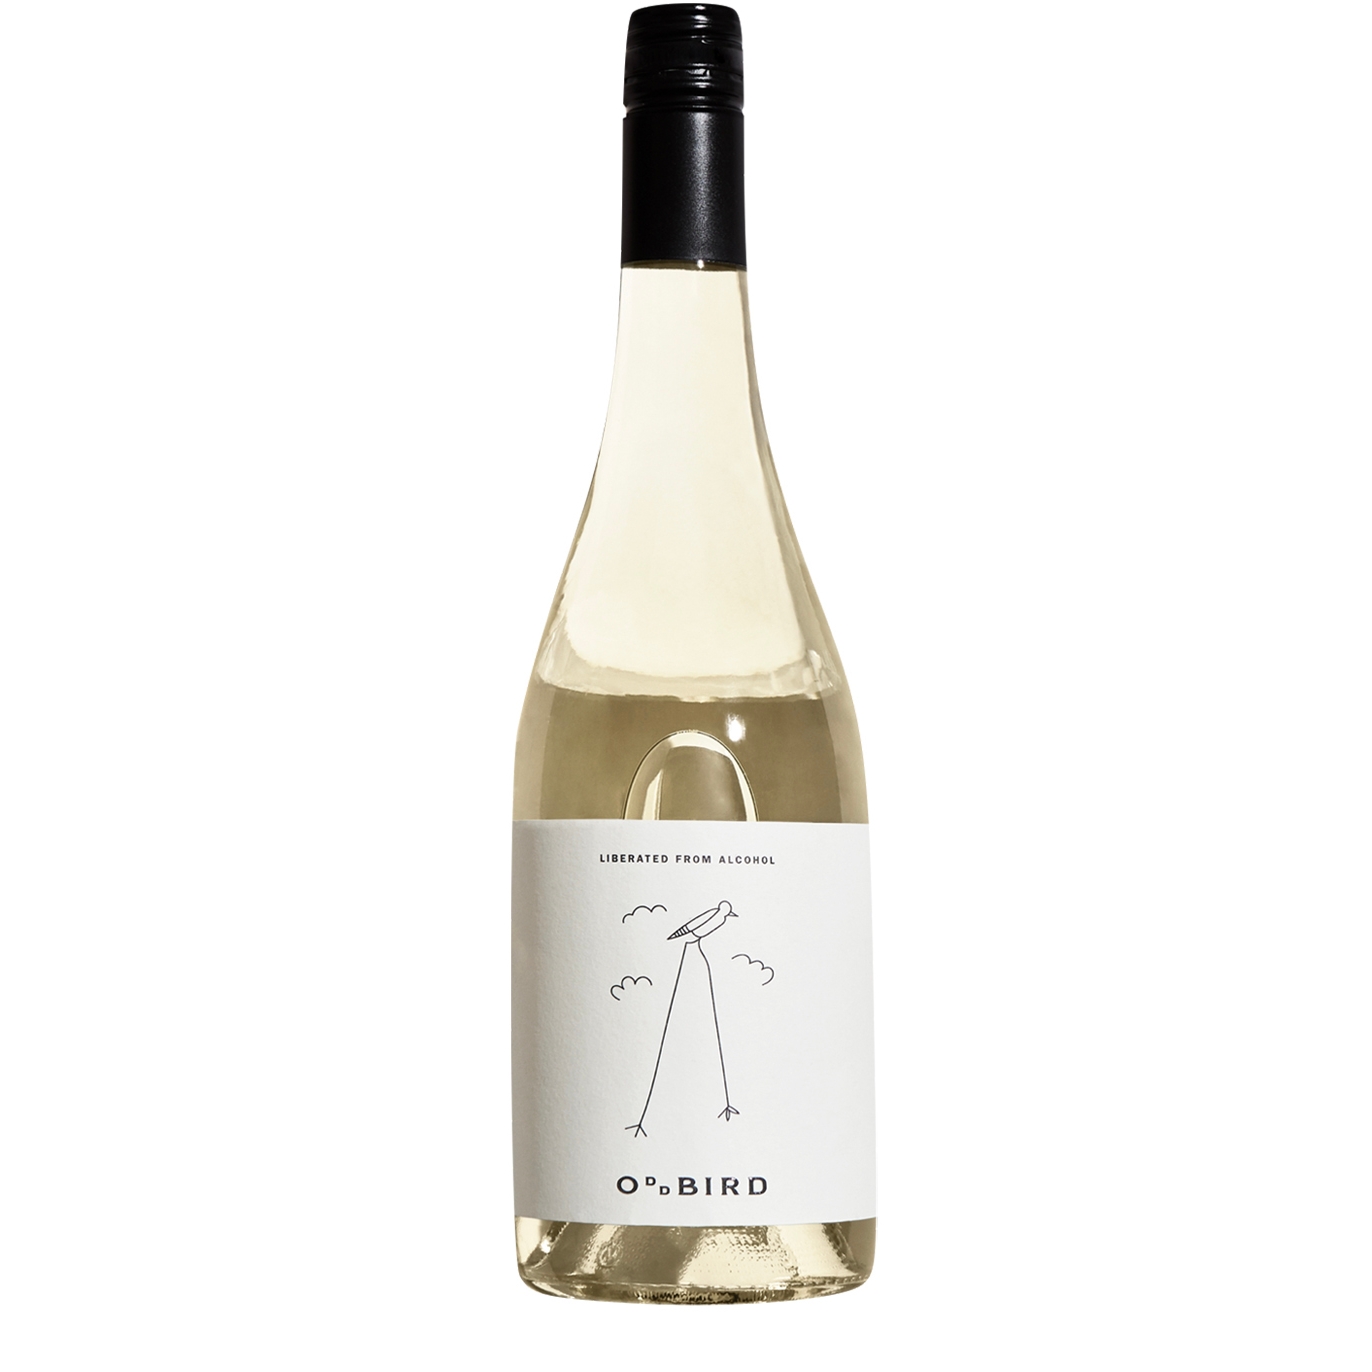 Oddbird Low Intervention Organic Alcohol-Free White No.1 White Wine